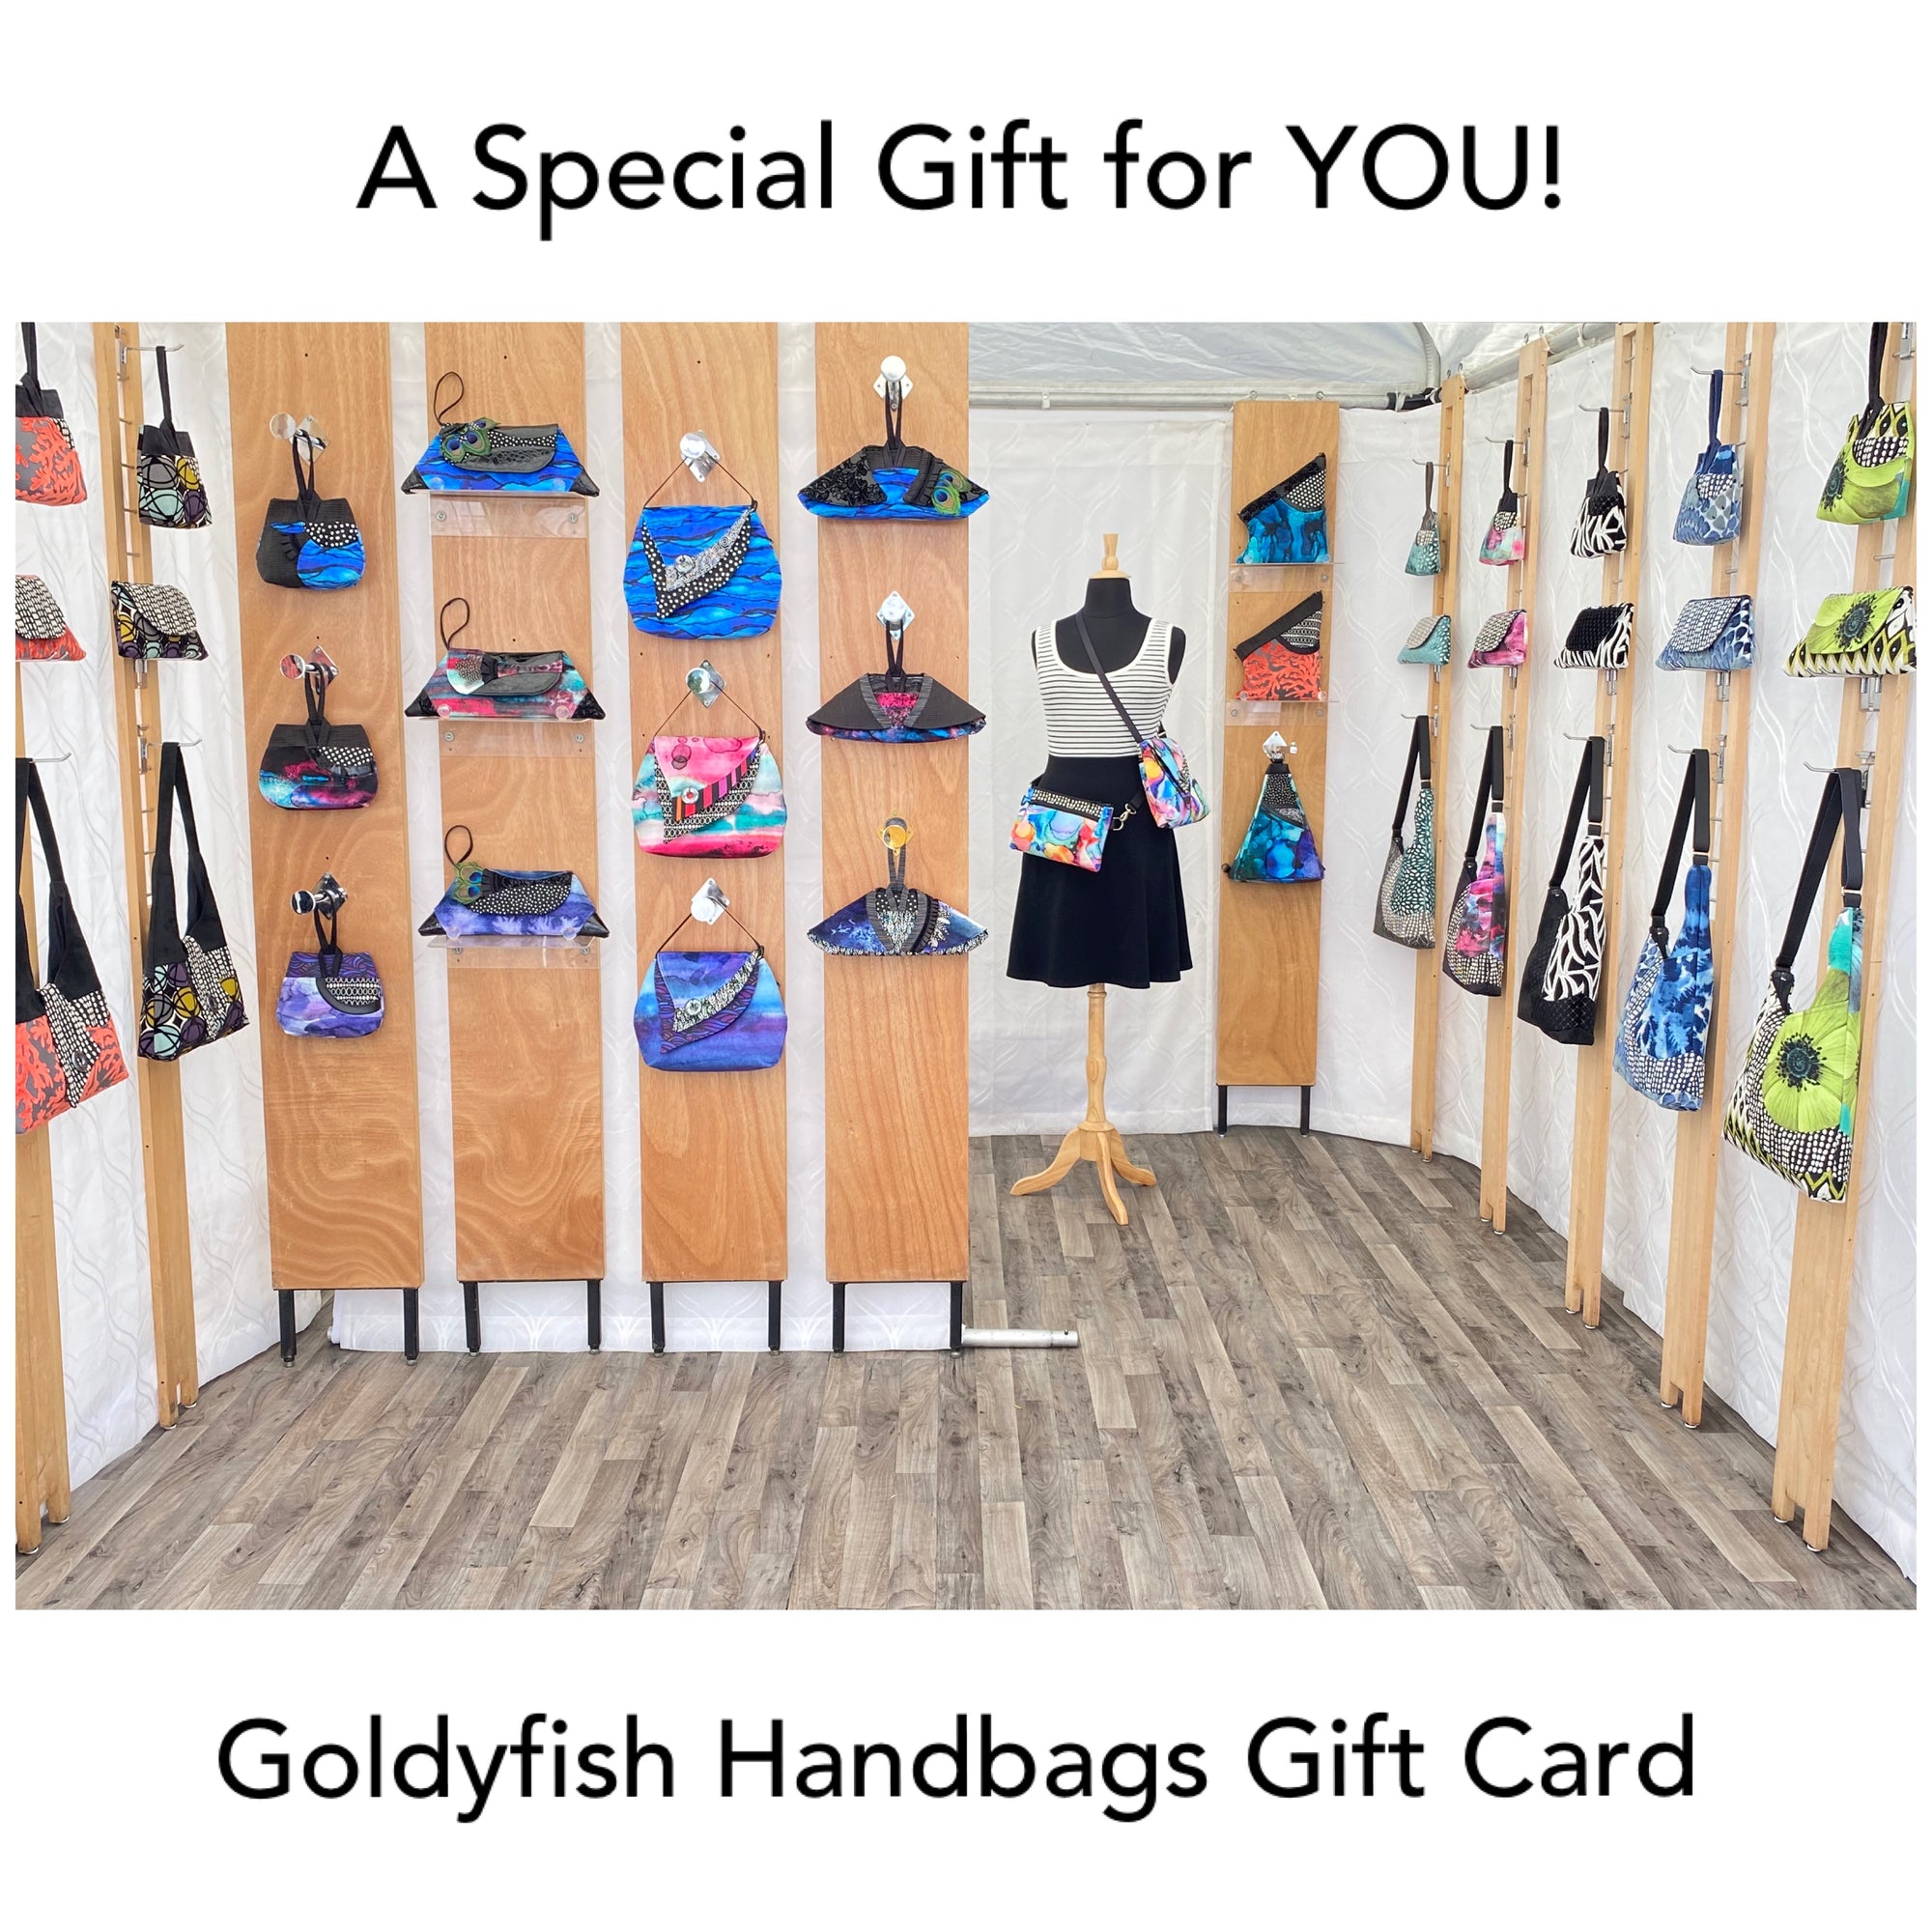 Goldyfish Handbags Gift Card (Electronically)